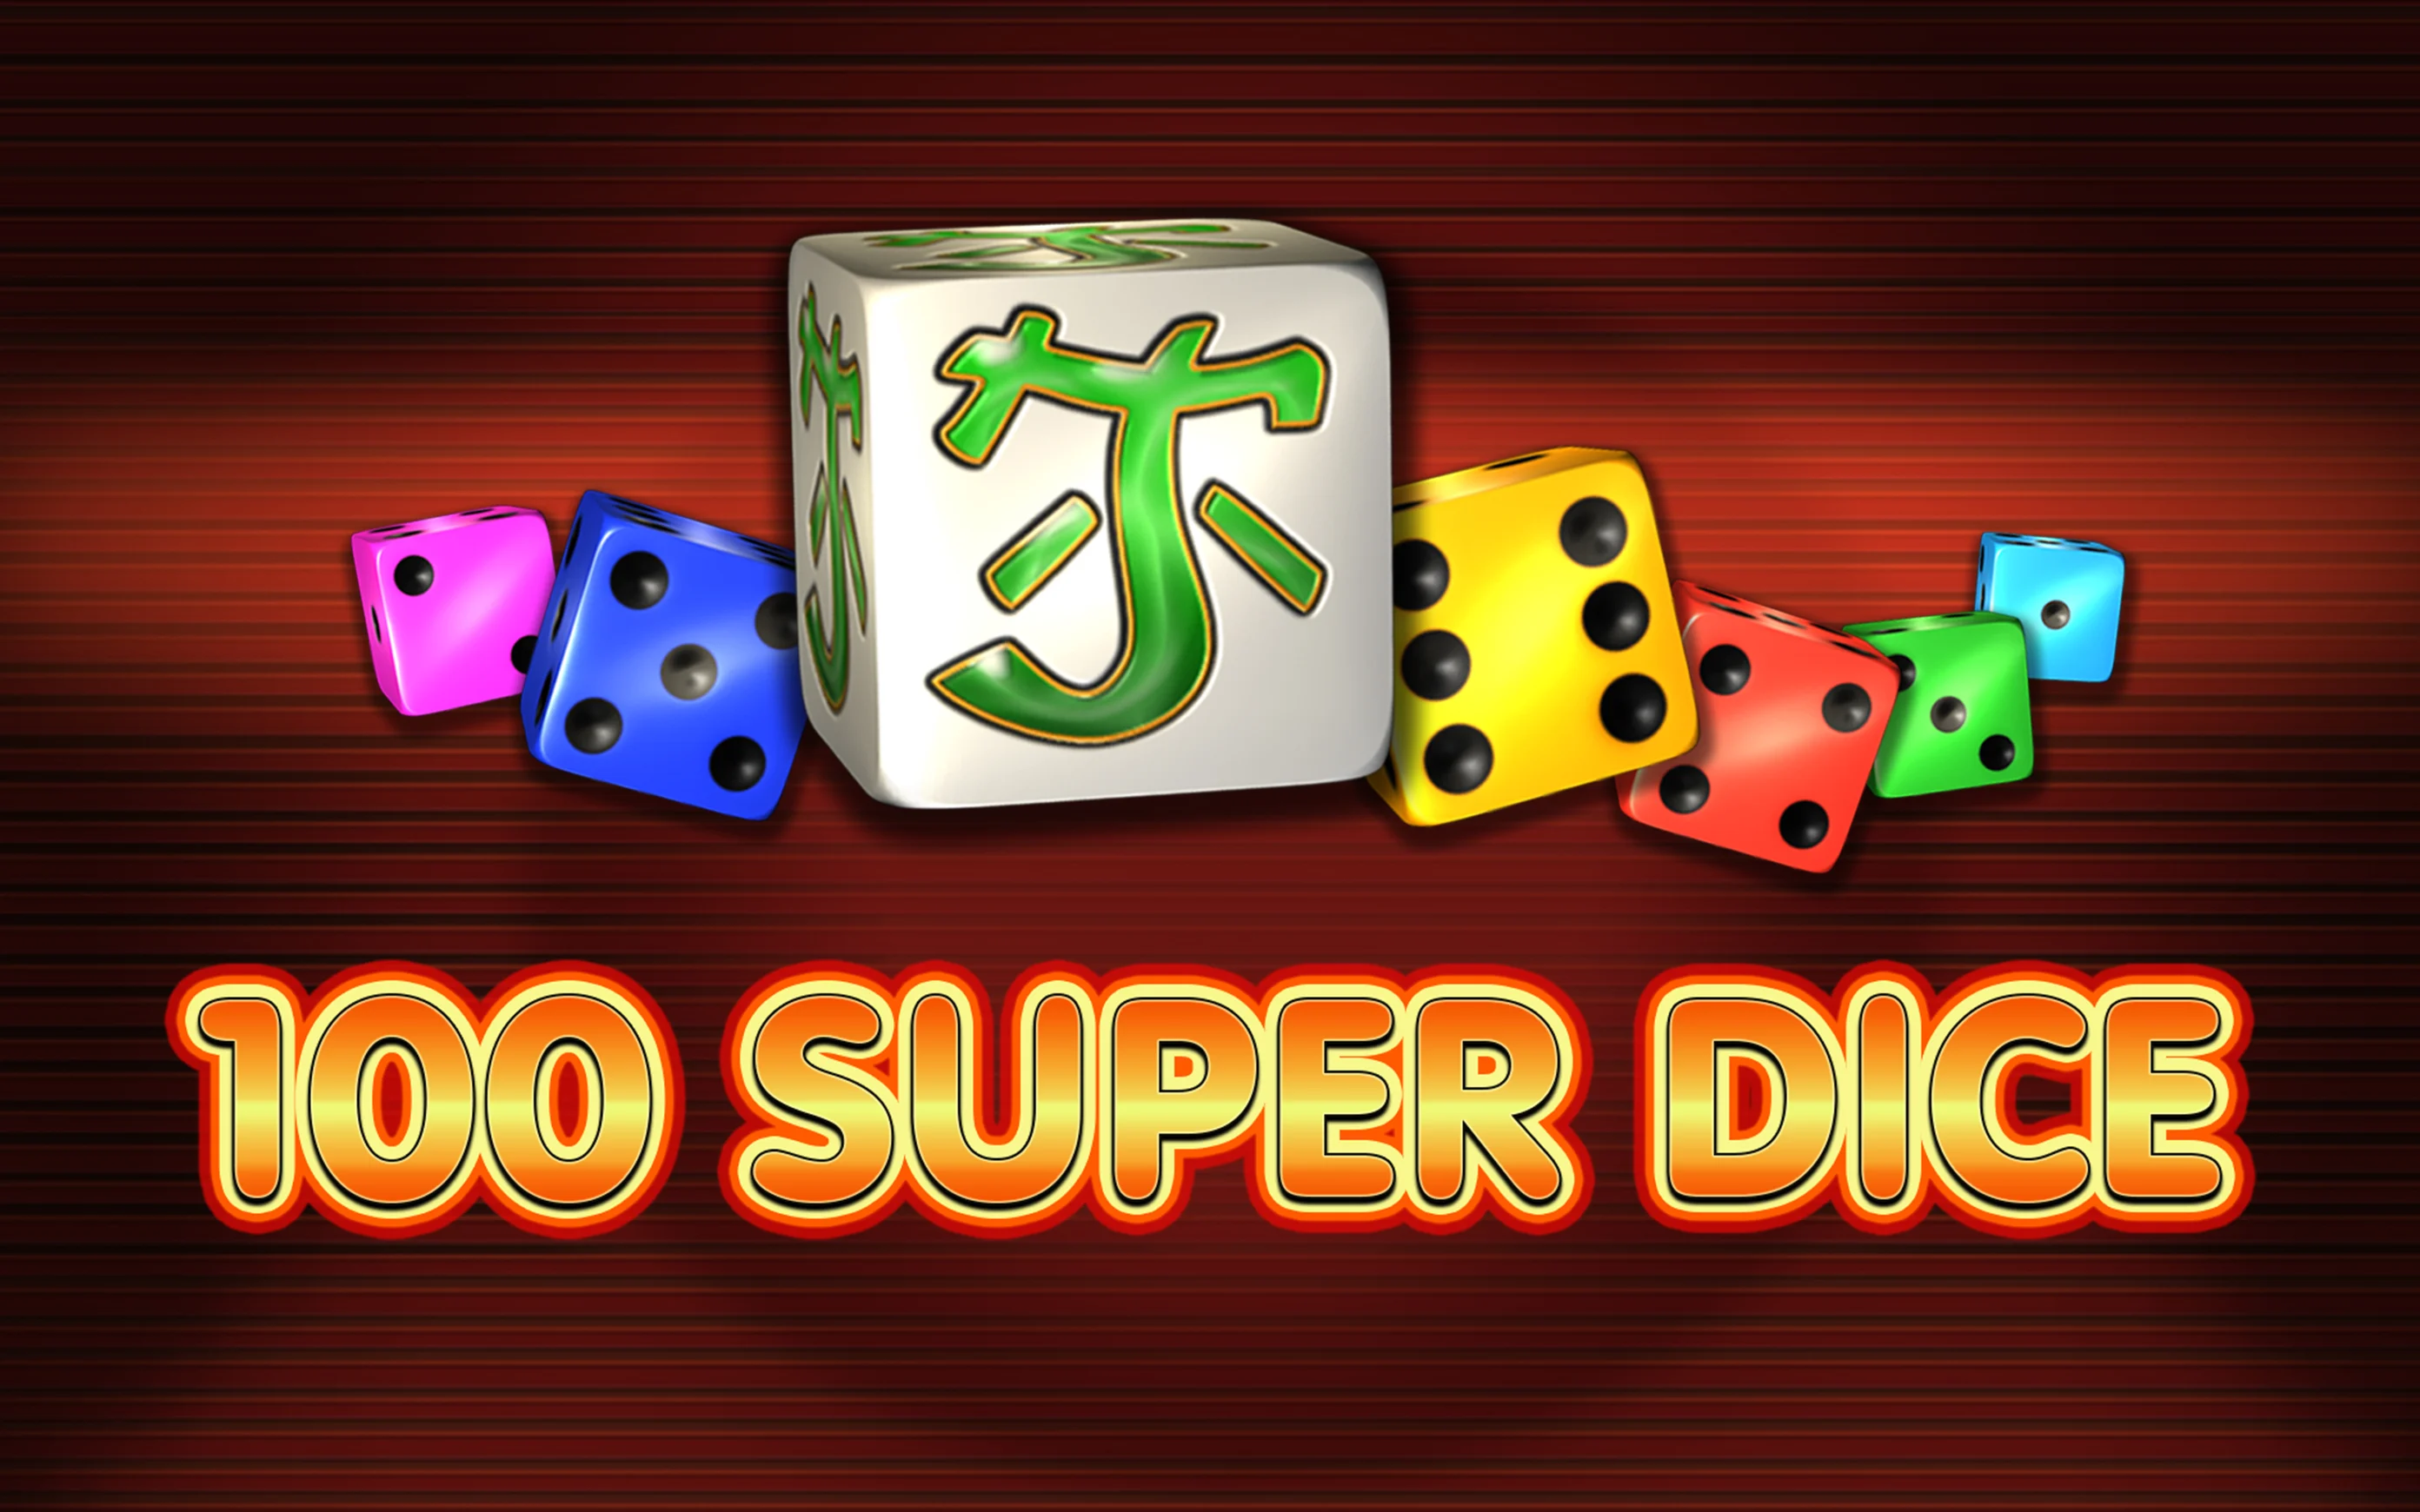 Juega a 100 Super Dice en el casino en línea de Starcasino.be